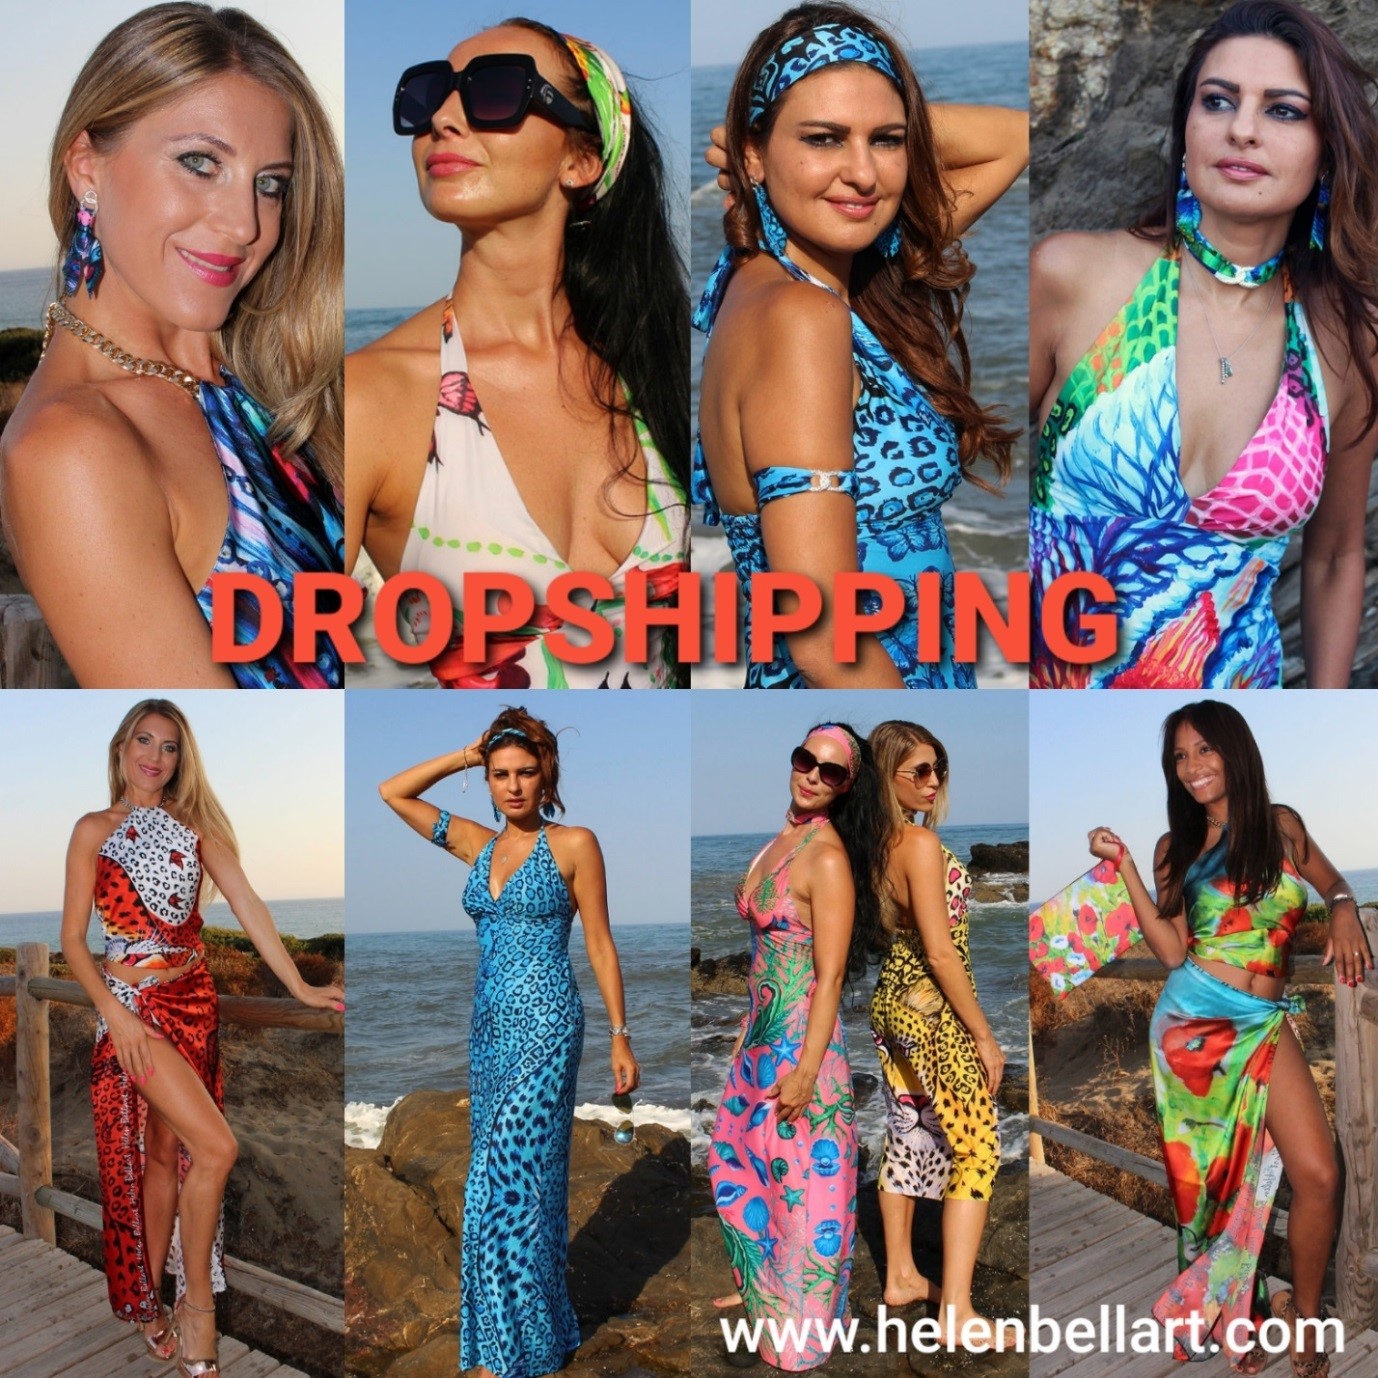 High-End Spanish Fashion Brand ‘Helen Bellart’ Recruiting Dropshipping Distributors